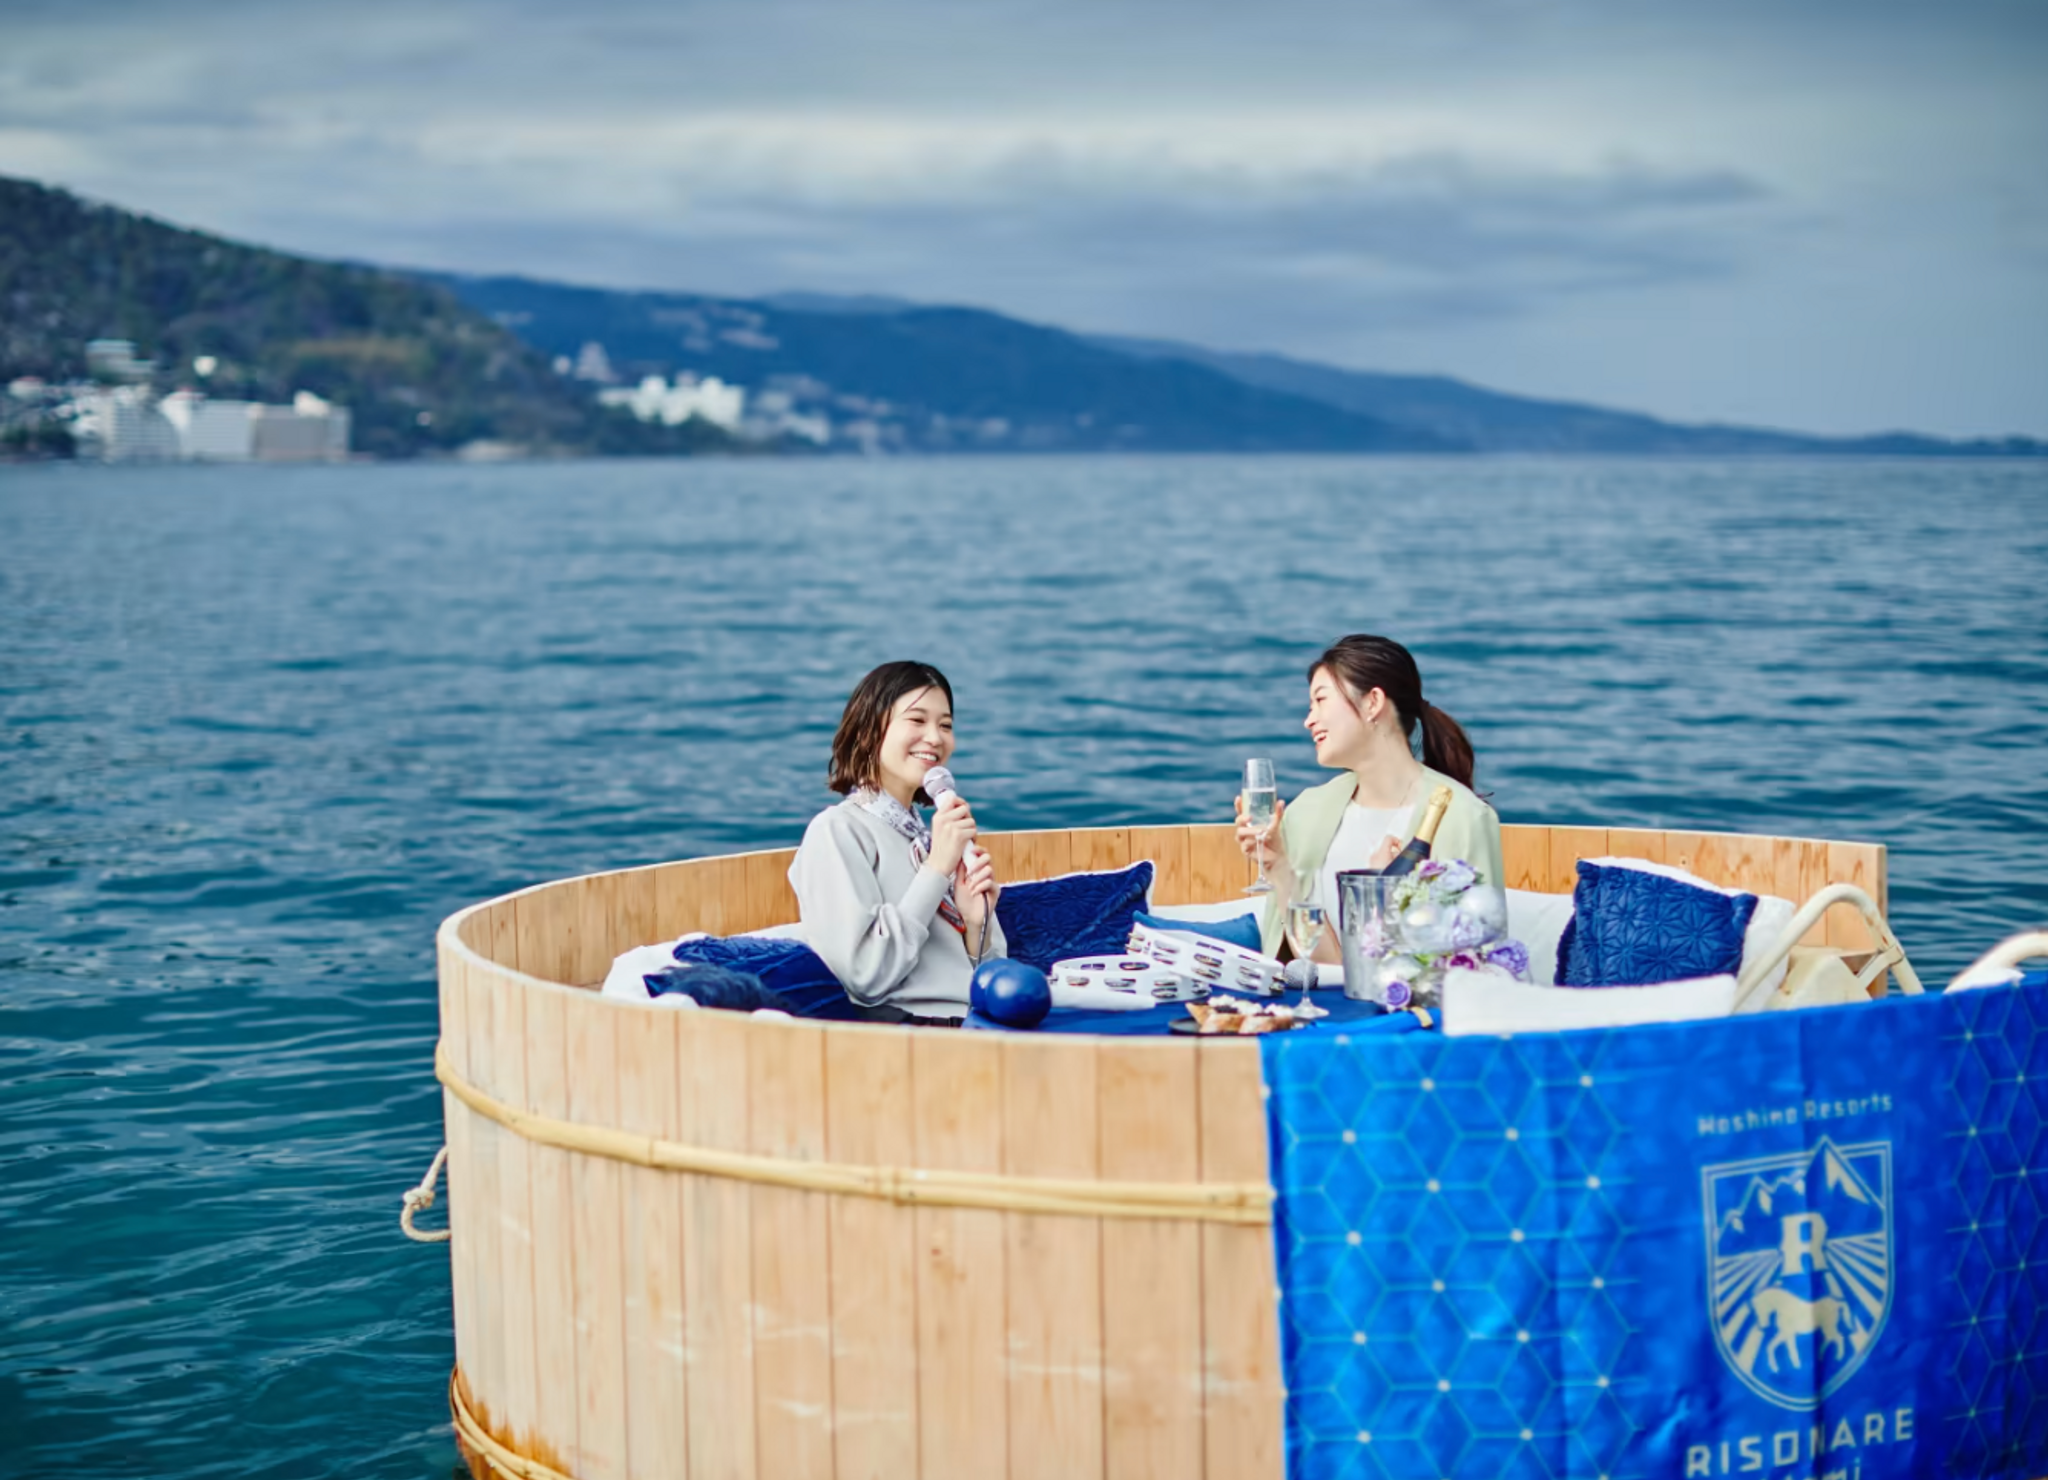 Hoshino Resorts’ ocean karaoke spices up luxury travel